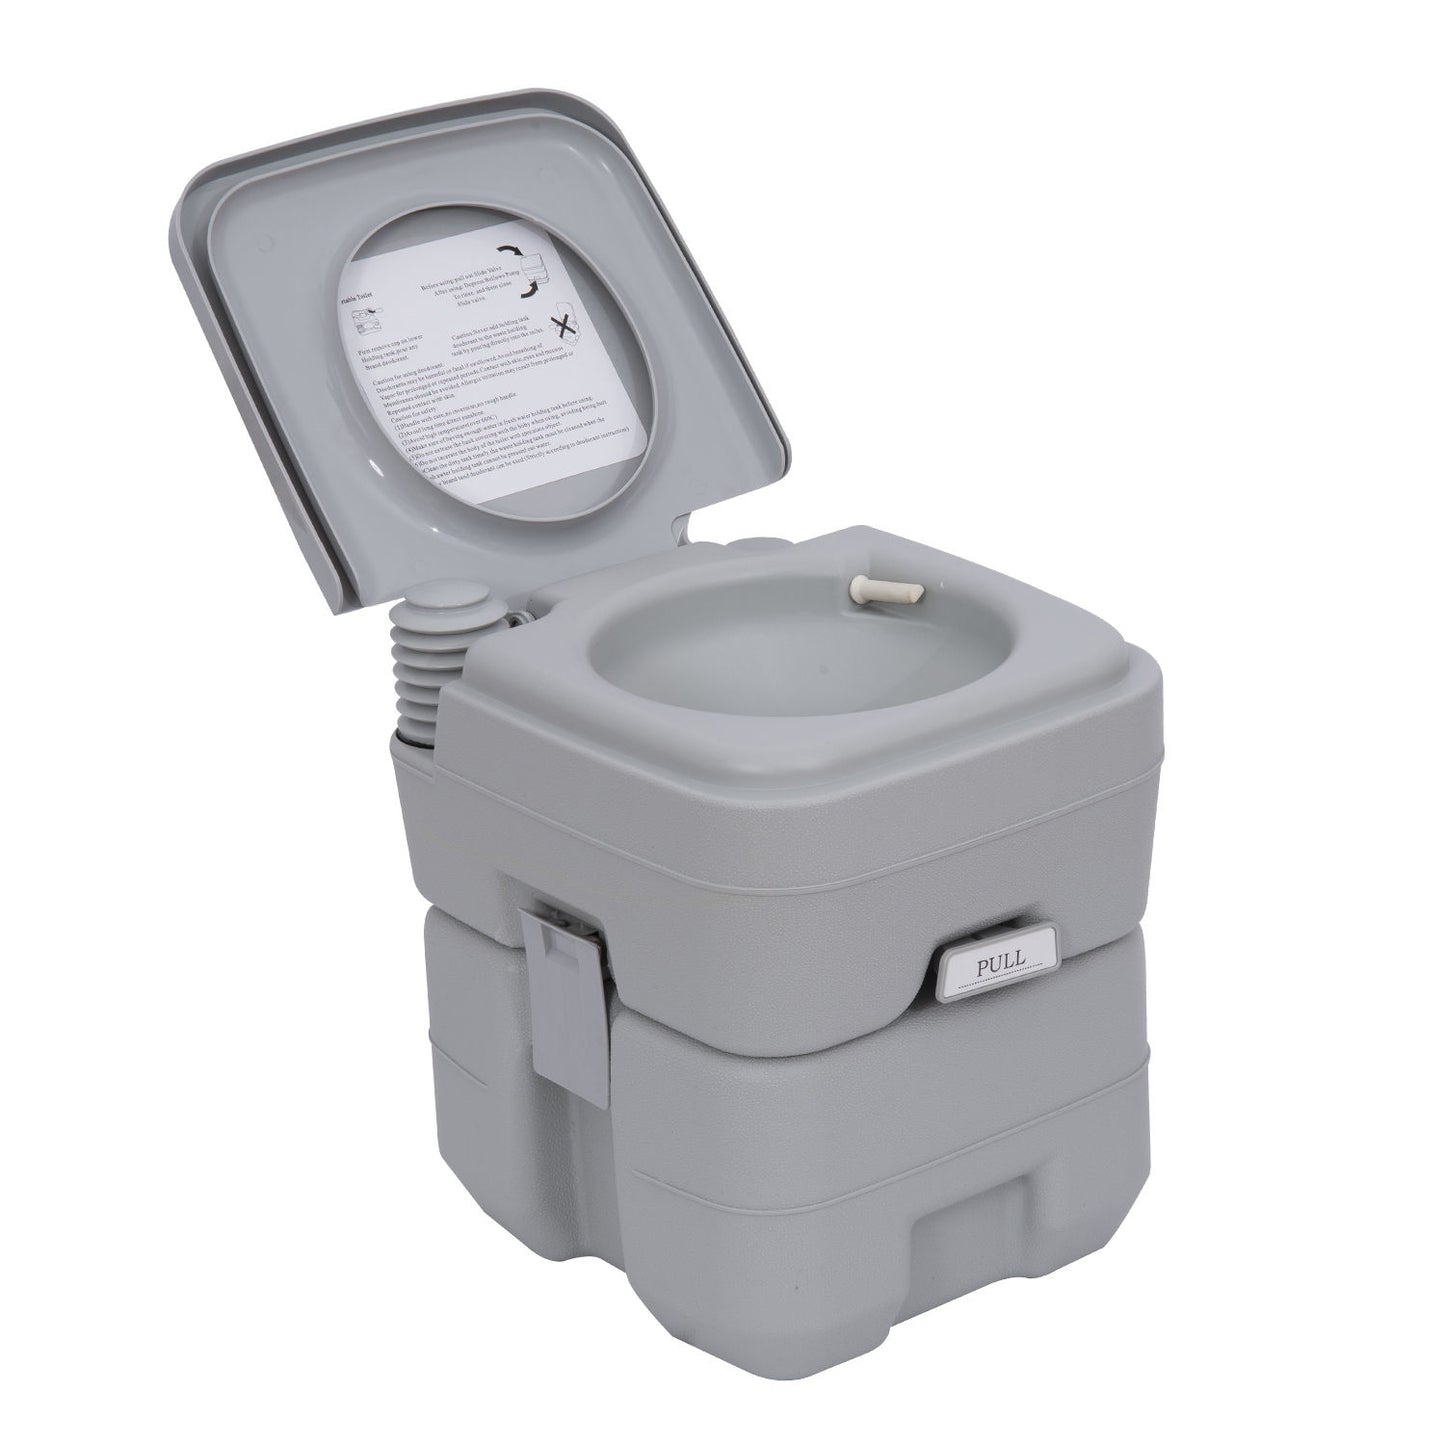 HOMCOM Portable Camping Toilet Potty Mobile Toilet-Grey